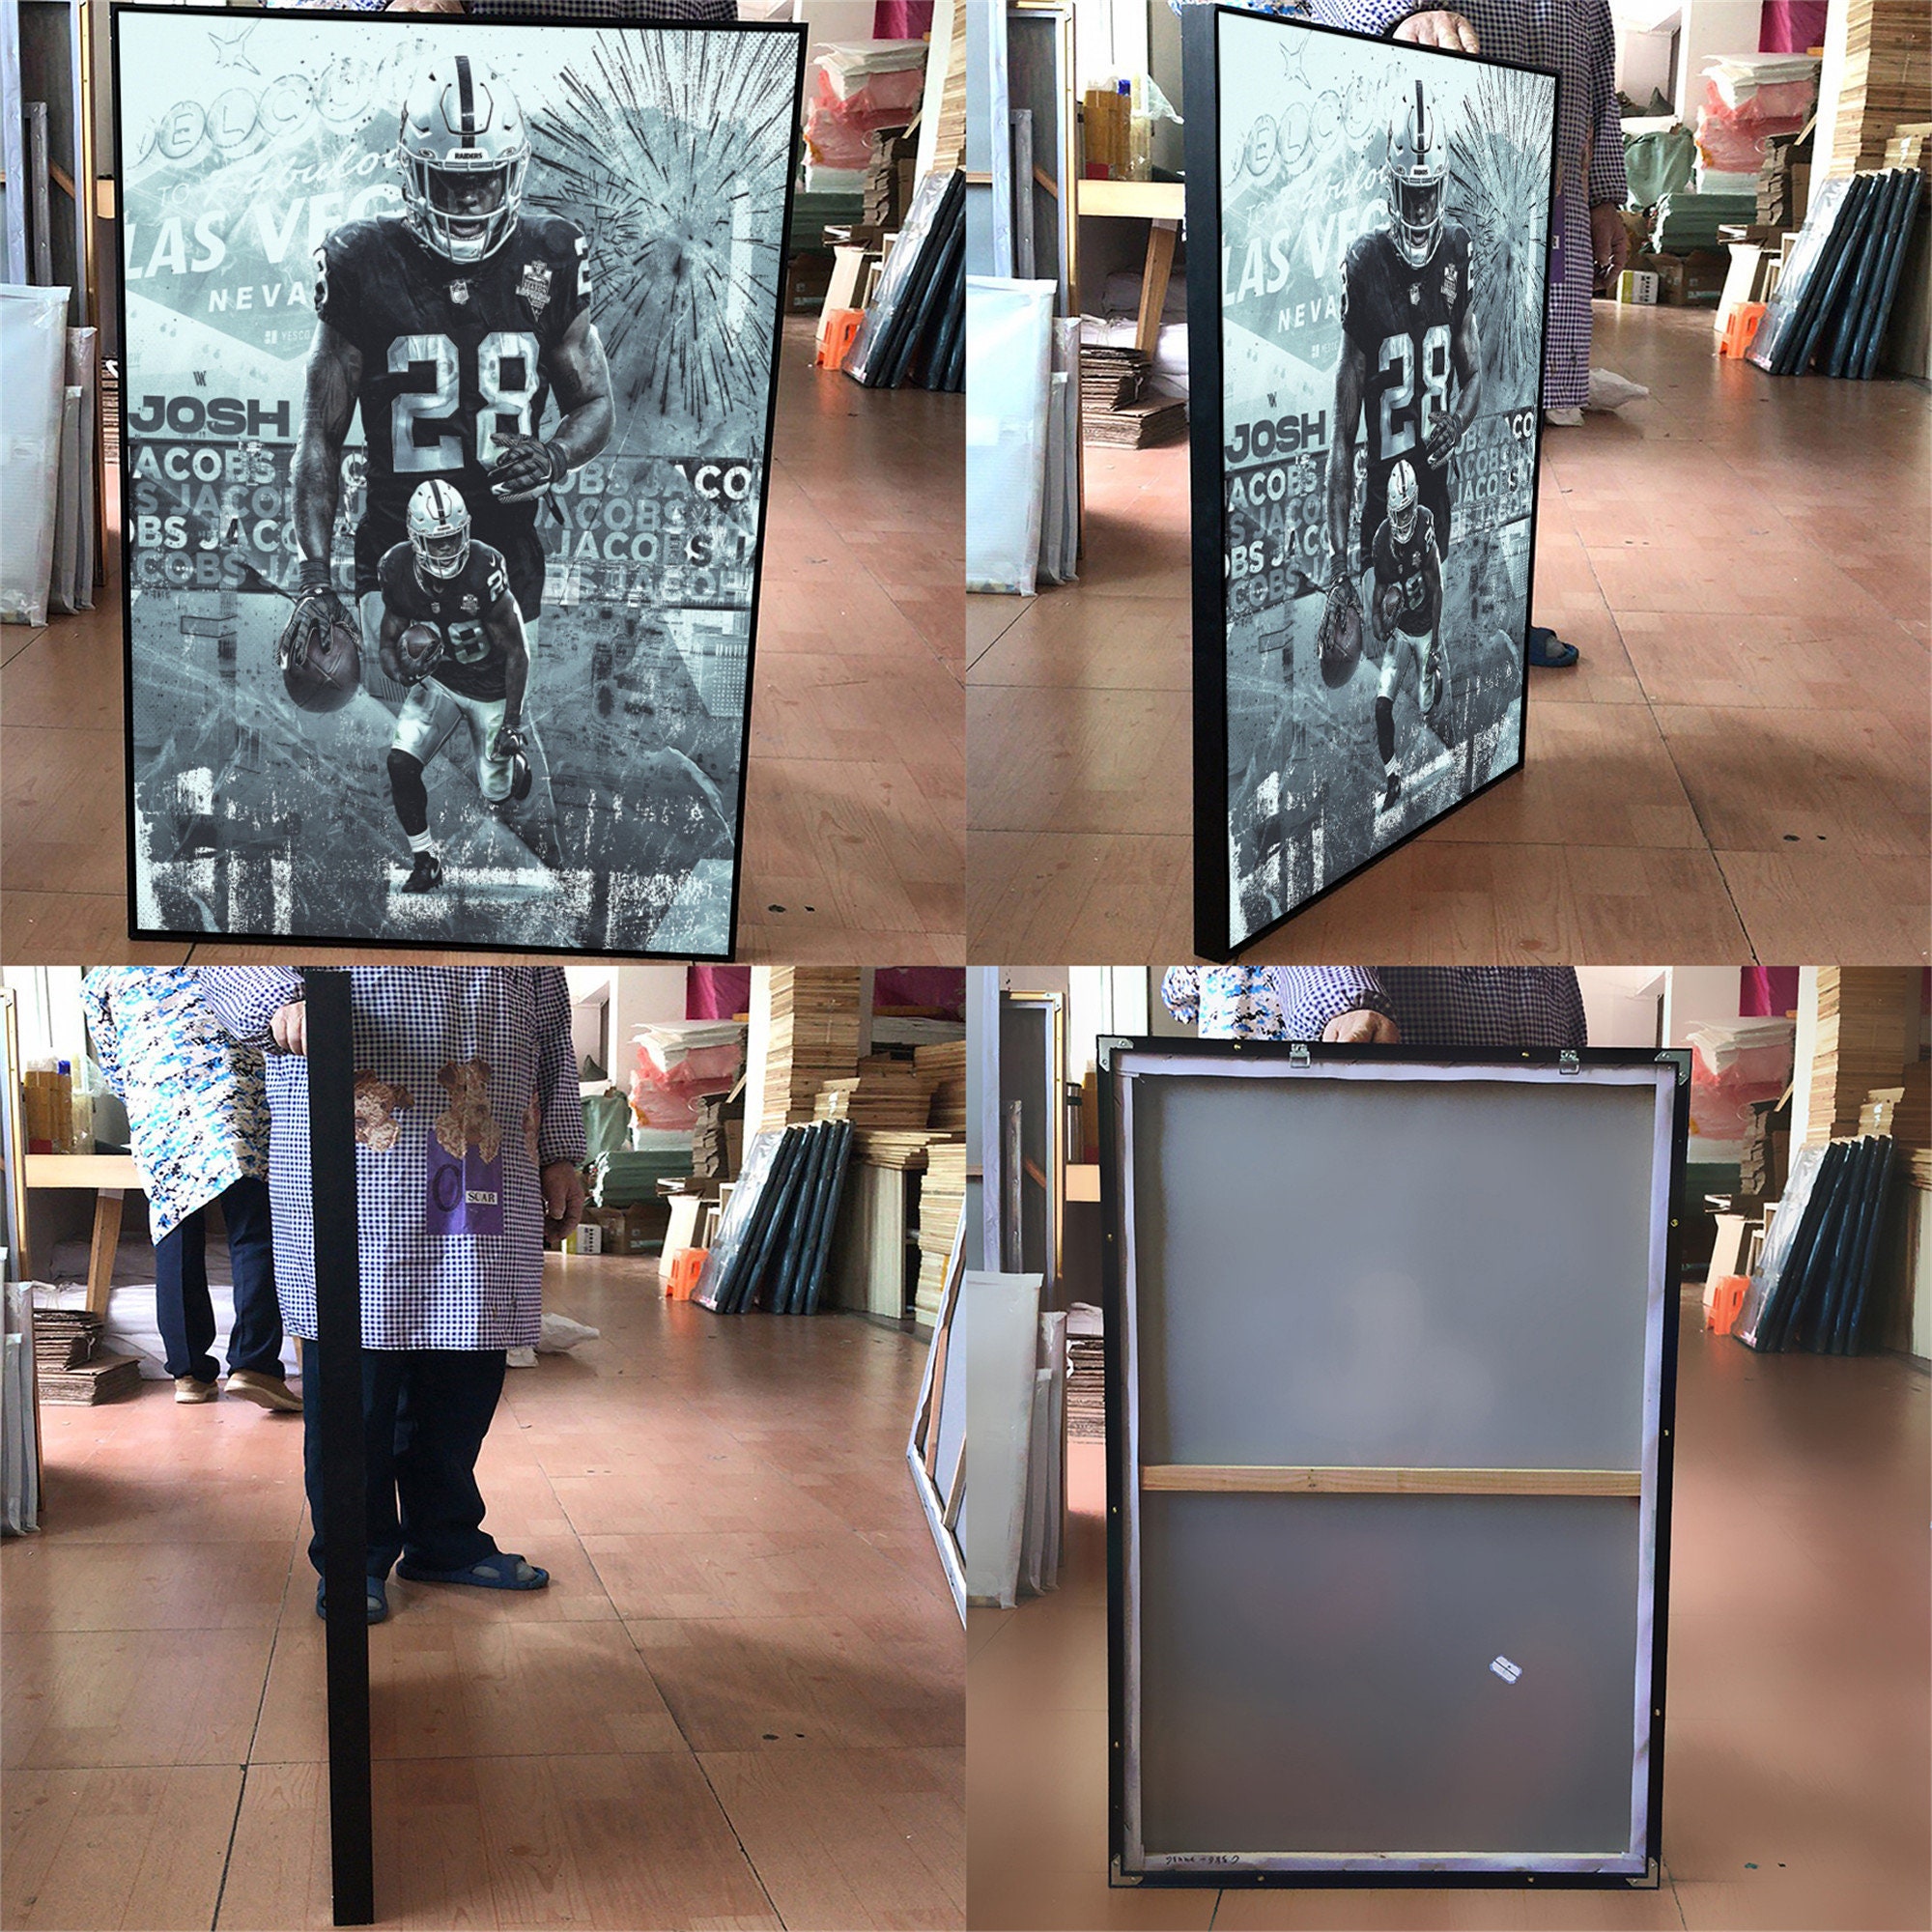 Josh Jacobs Poster Las Vegas Raiders Football Hand Made Posters Canvas –  CanvasBlackArt